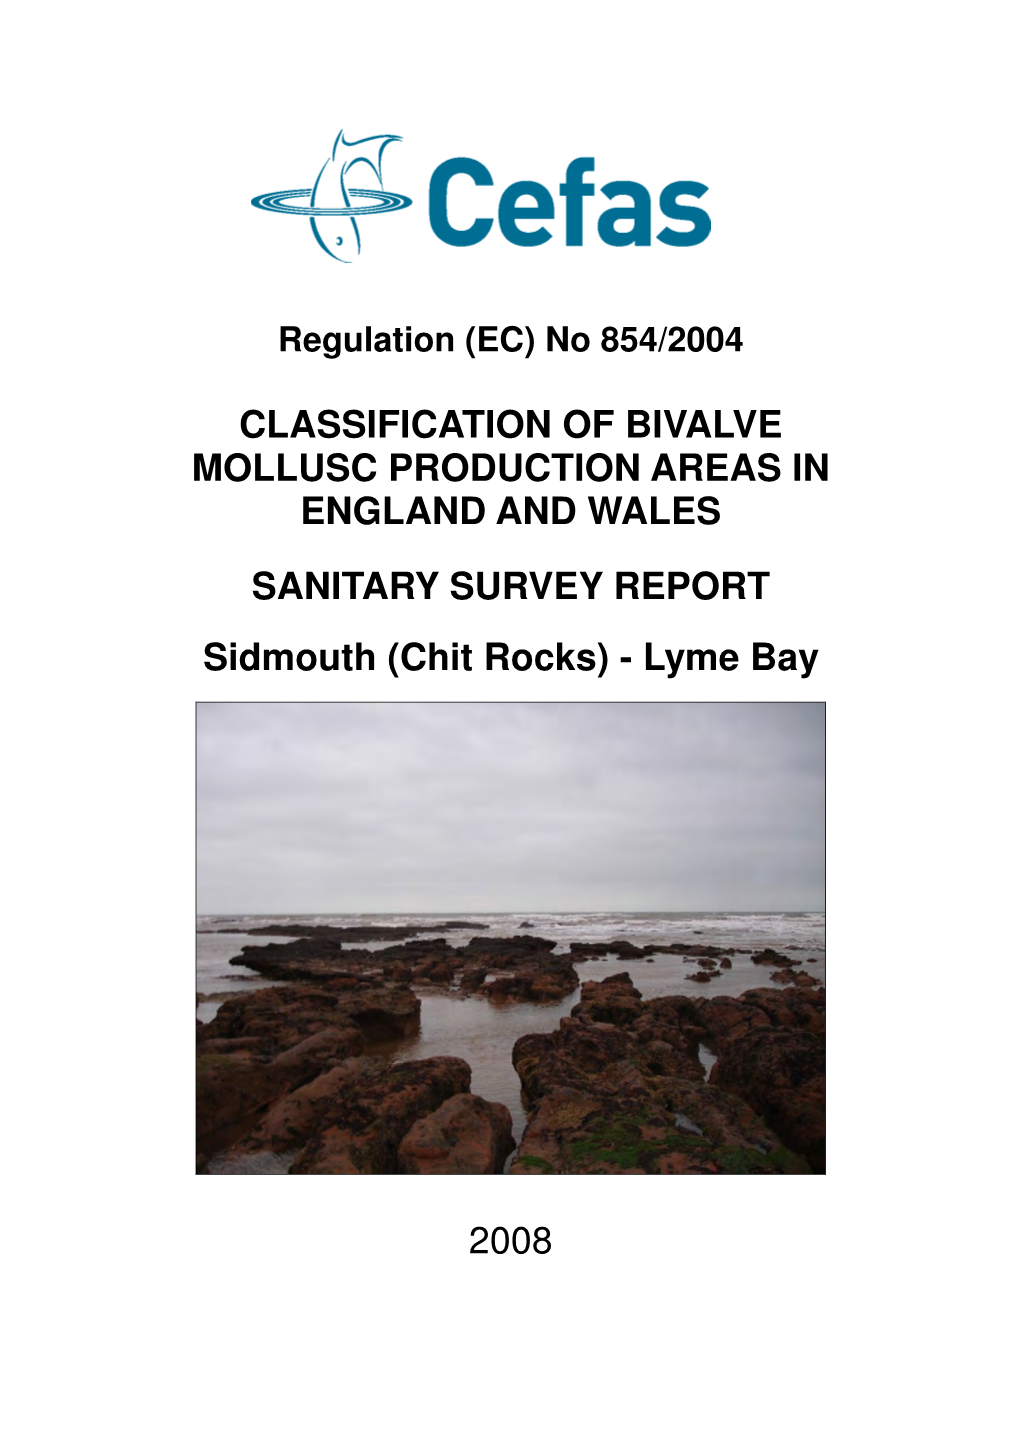 (Chit Rocks) - Lyme Bay